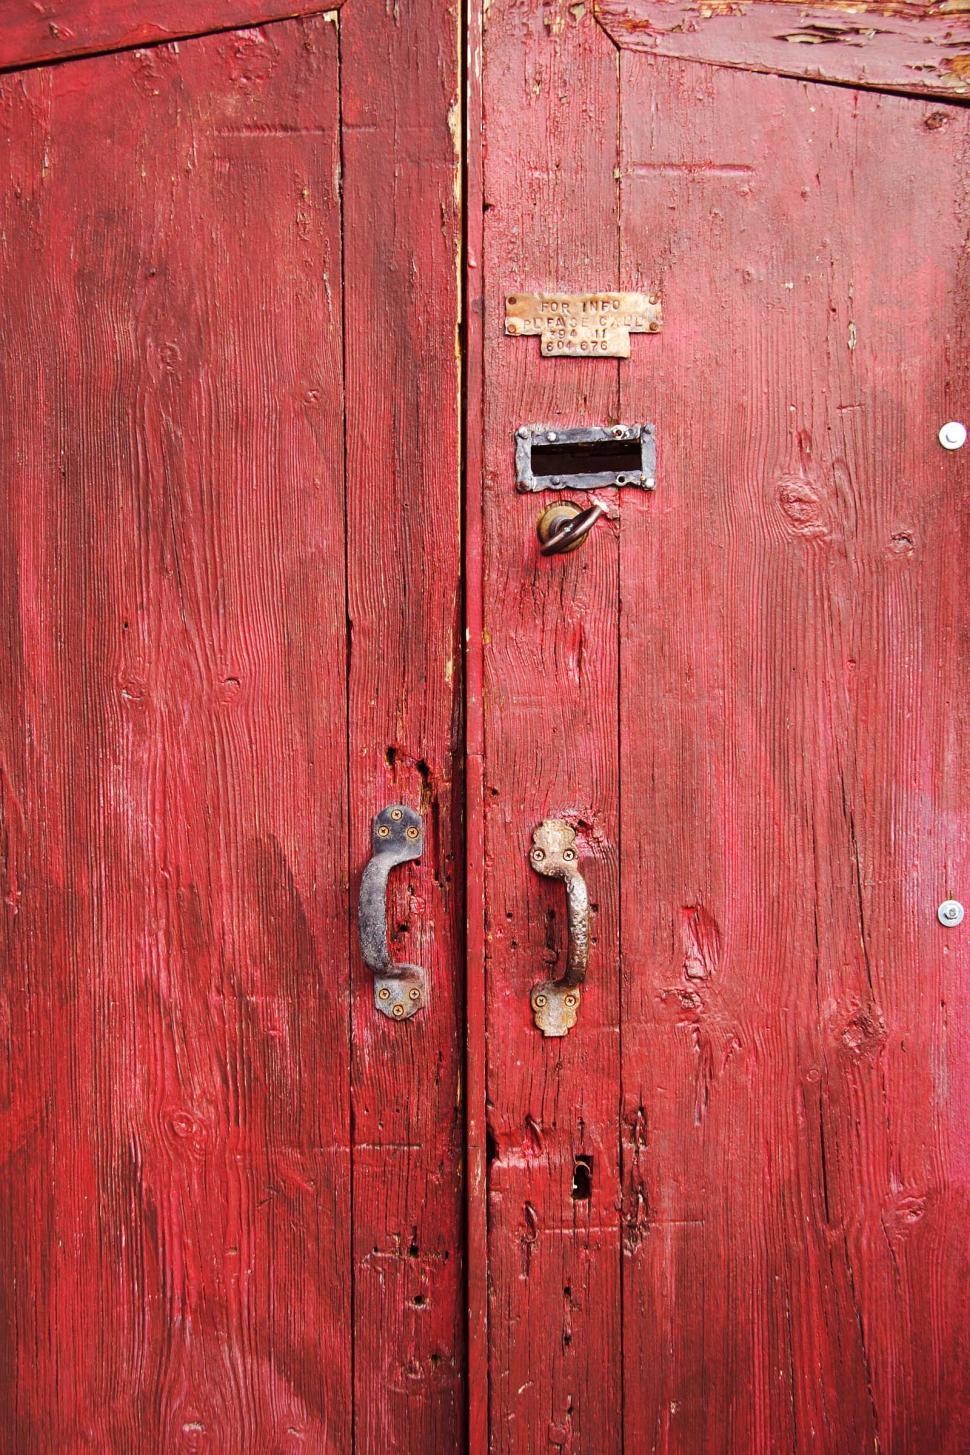 Free Image of Red wooden doors 